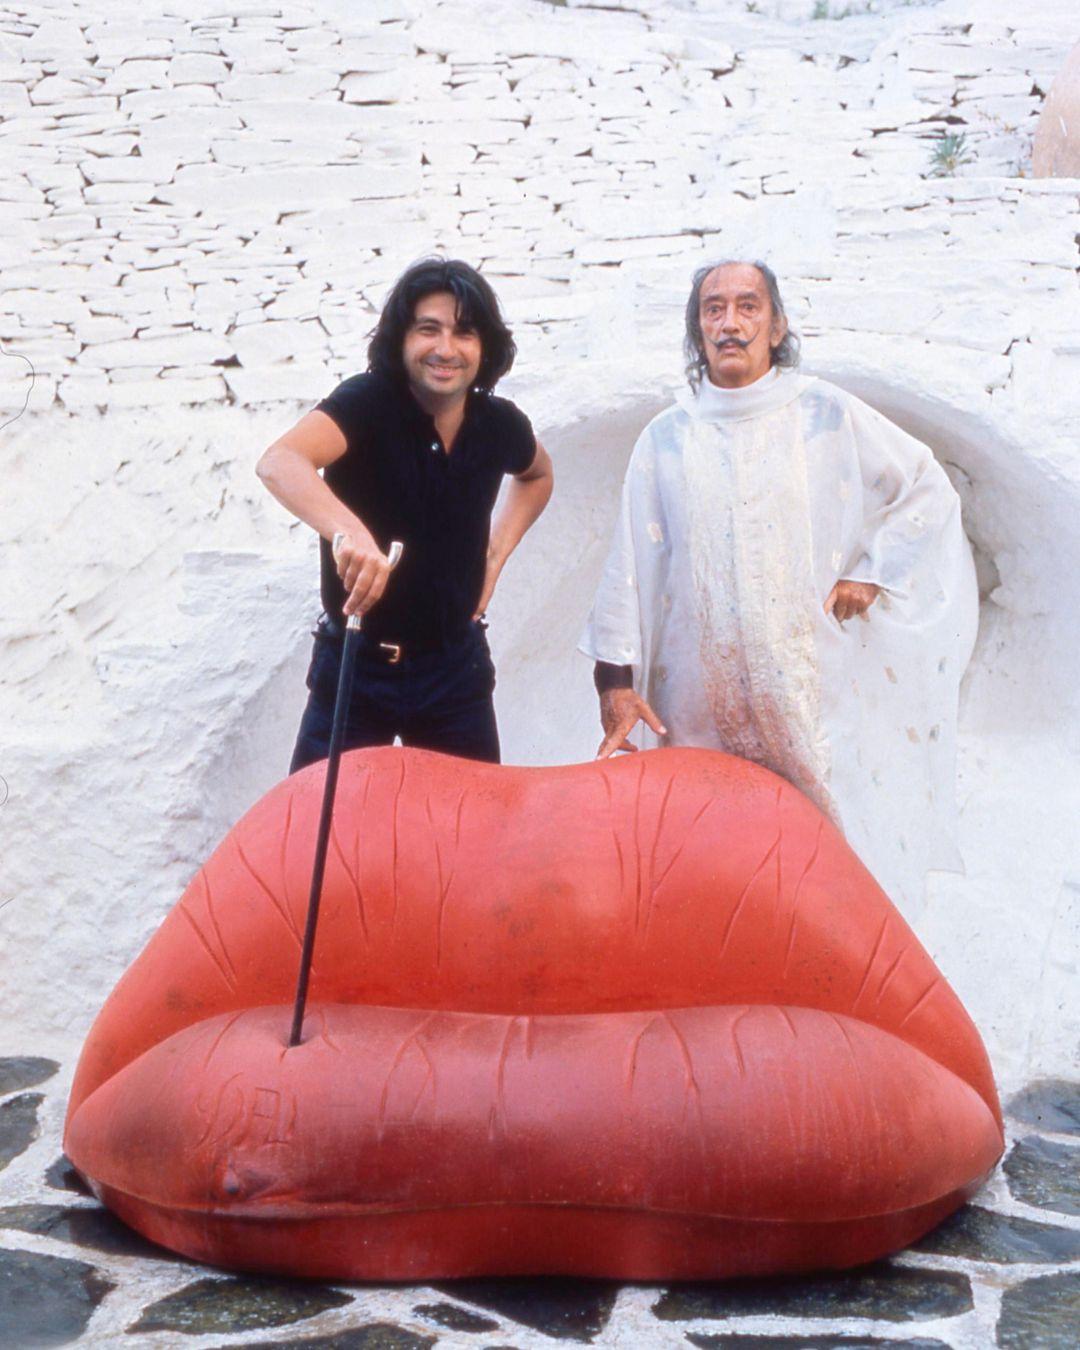 Modern  Surrealist  Salivasofa 'Original' Prototype Red Lips Sofa By Salvador Dali  For Sale